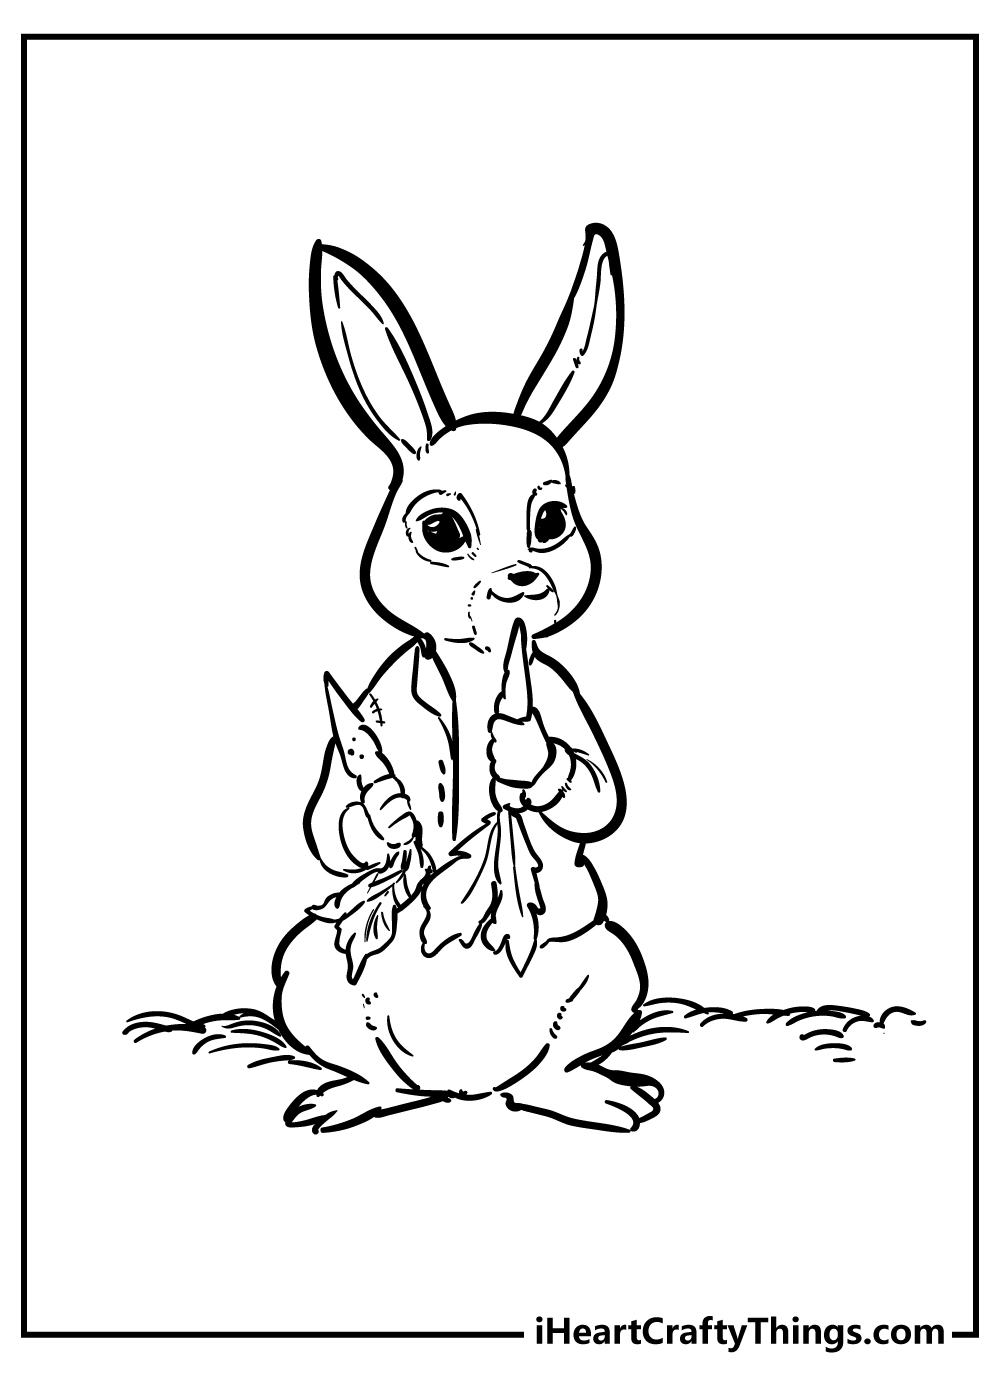 Peter Rabbit Coloring Original Sheet for children free download